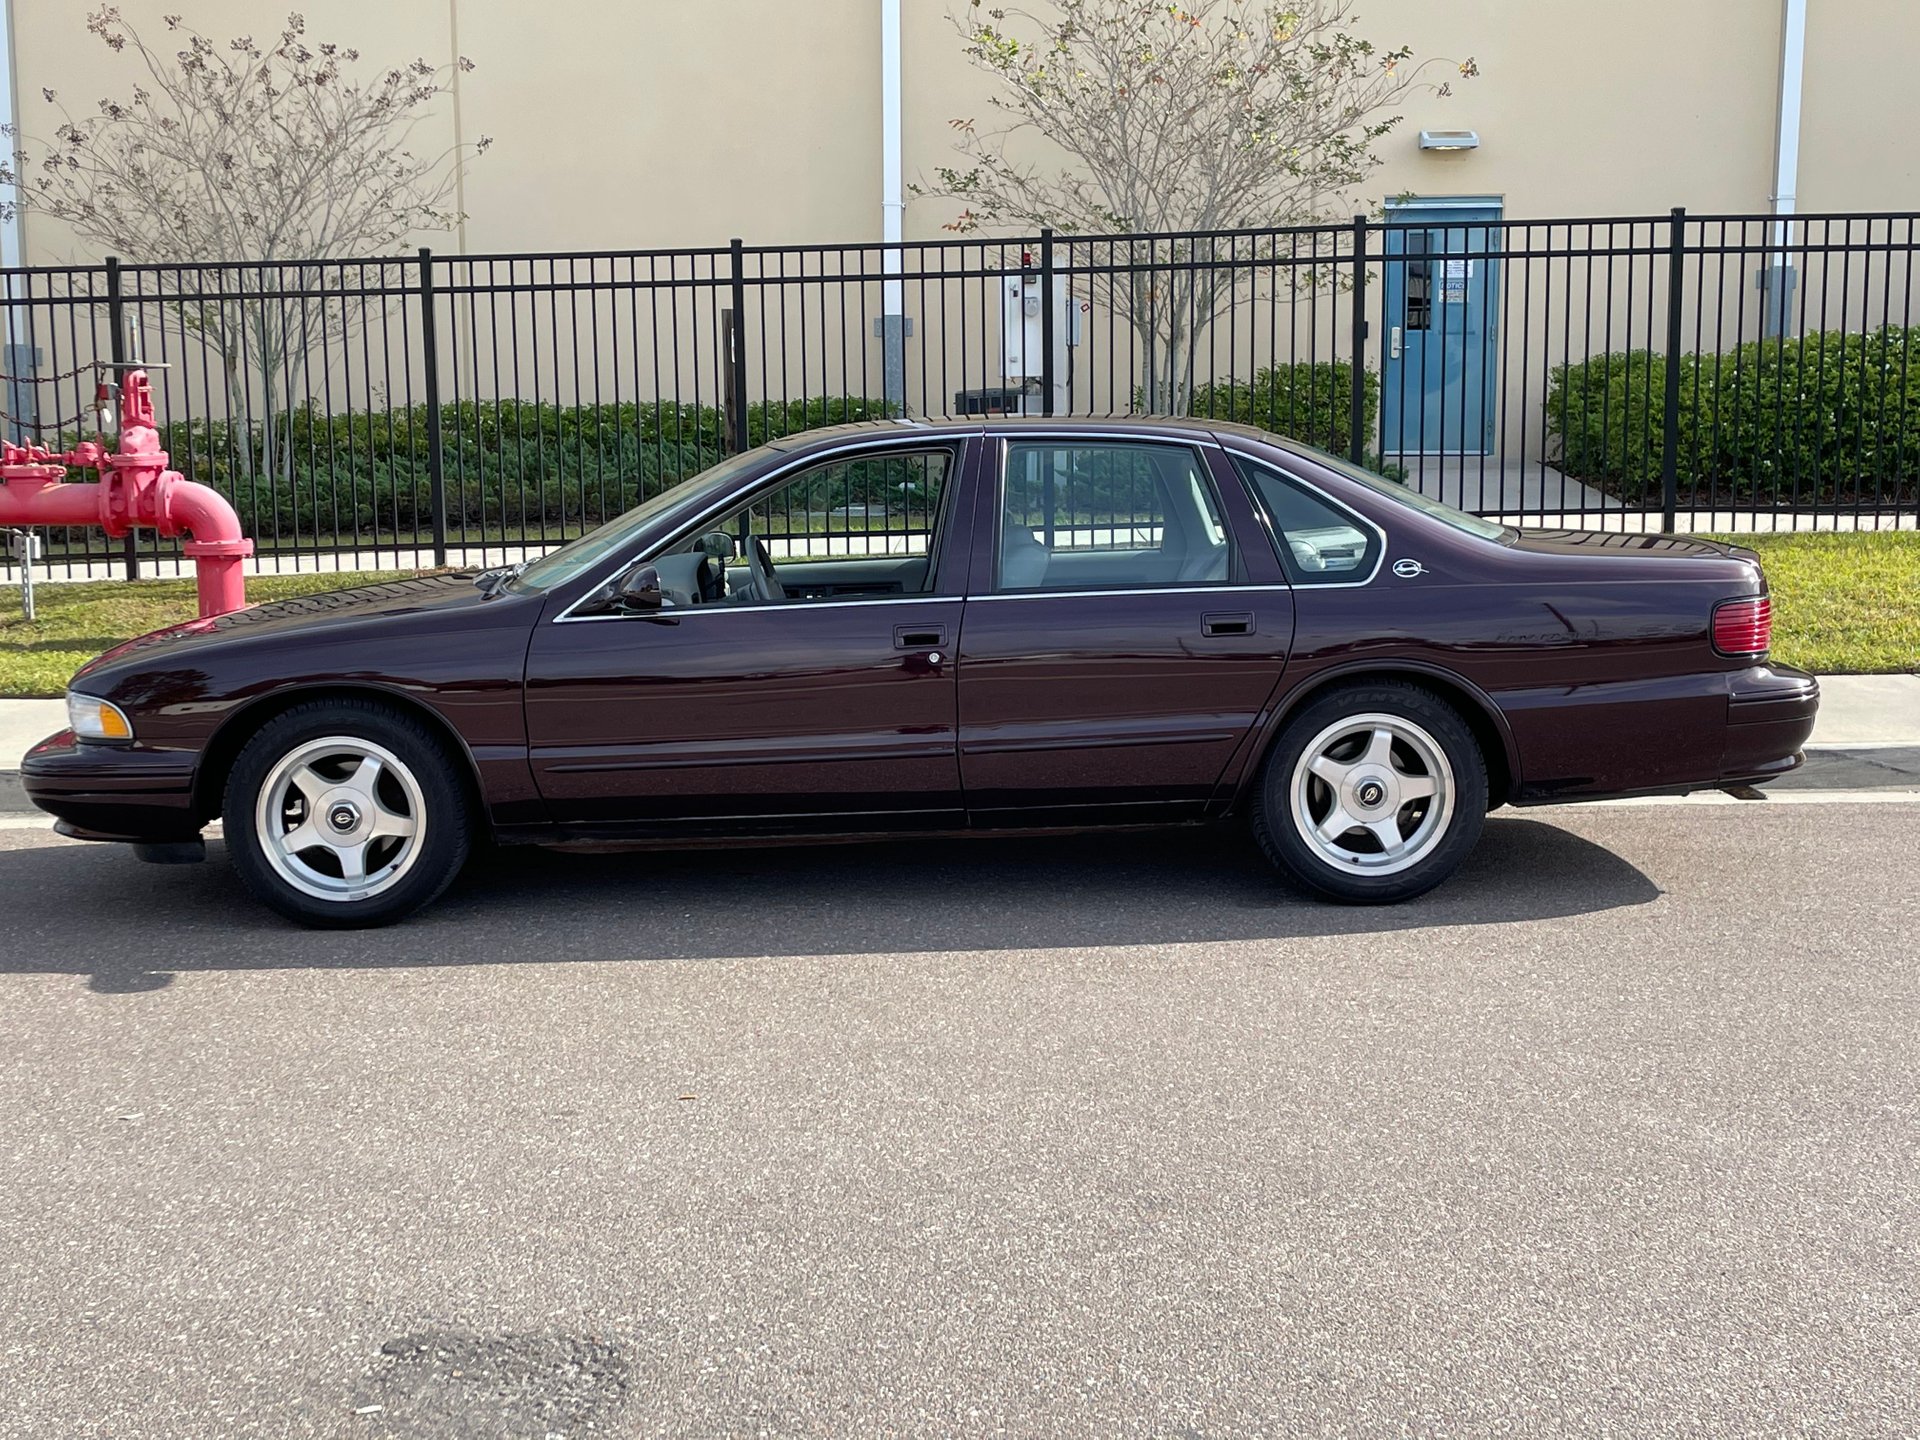 1995 chevrolet impala ss